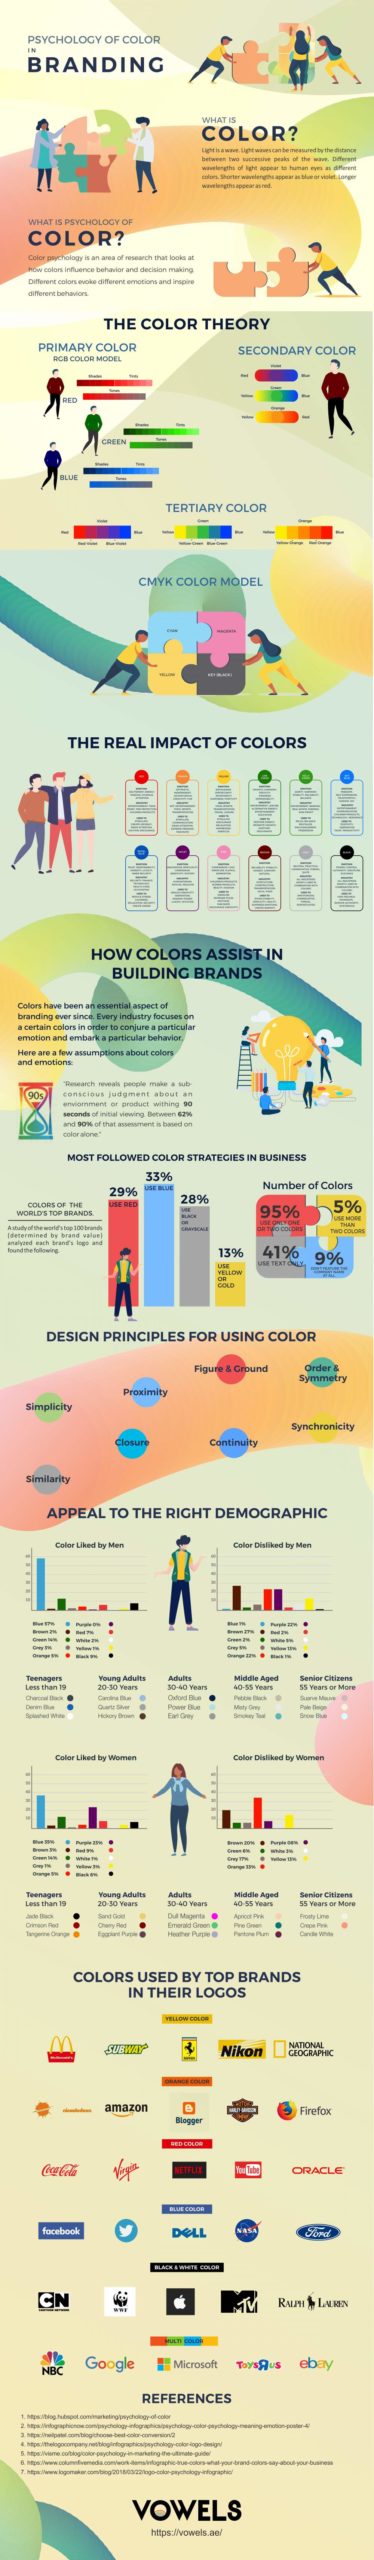 Psychology-of-Color-in-Branding